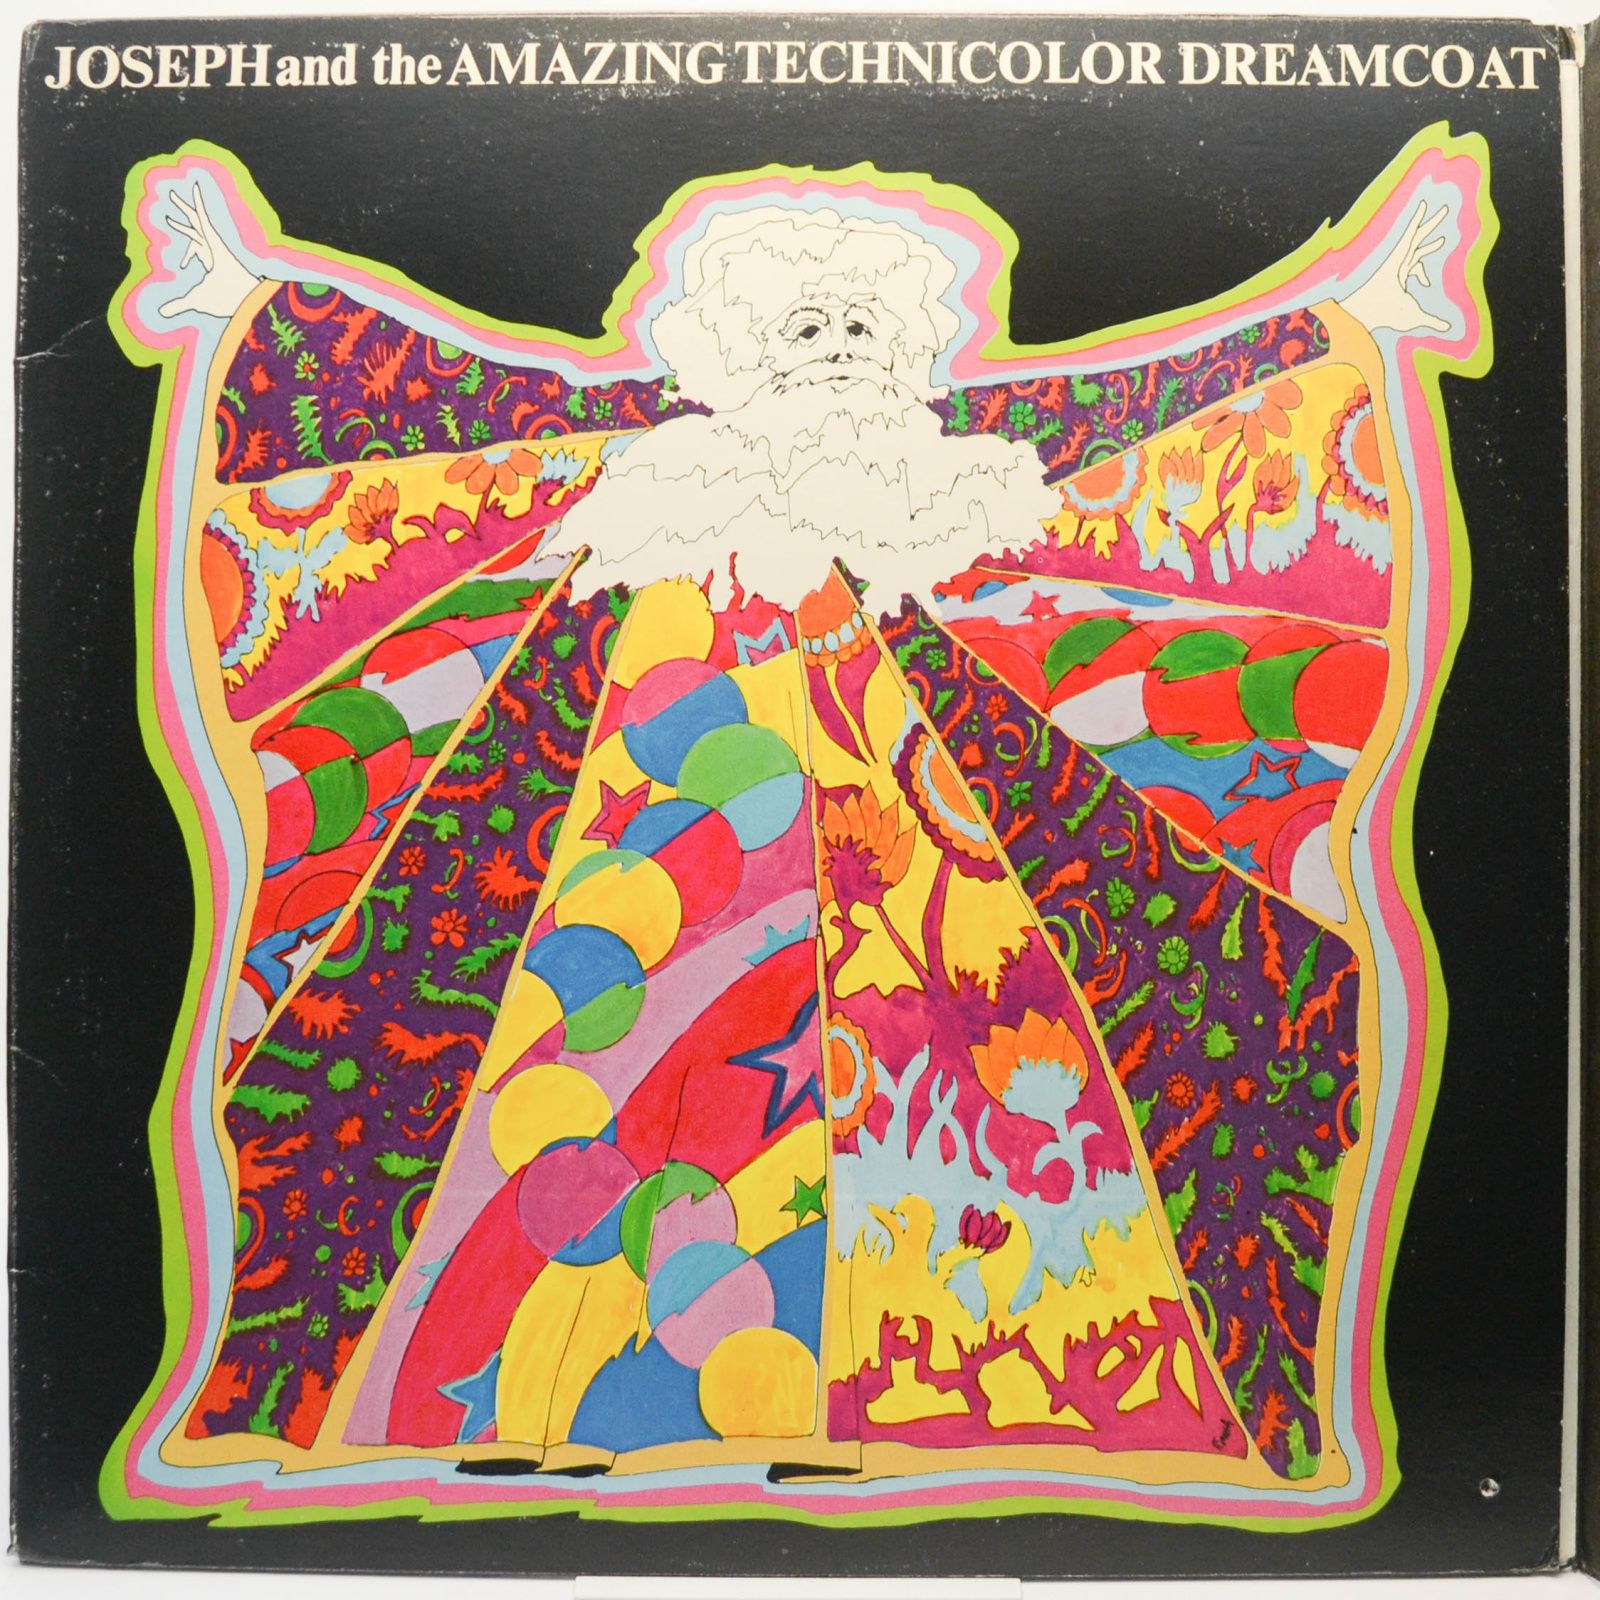 Joseph Consortium, Andrew Lloyd Webber, Tim Rice — Joseph And The Amazing Technicolor Dreamcoat (USA), 1971